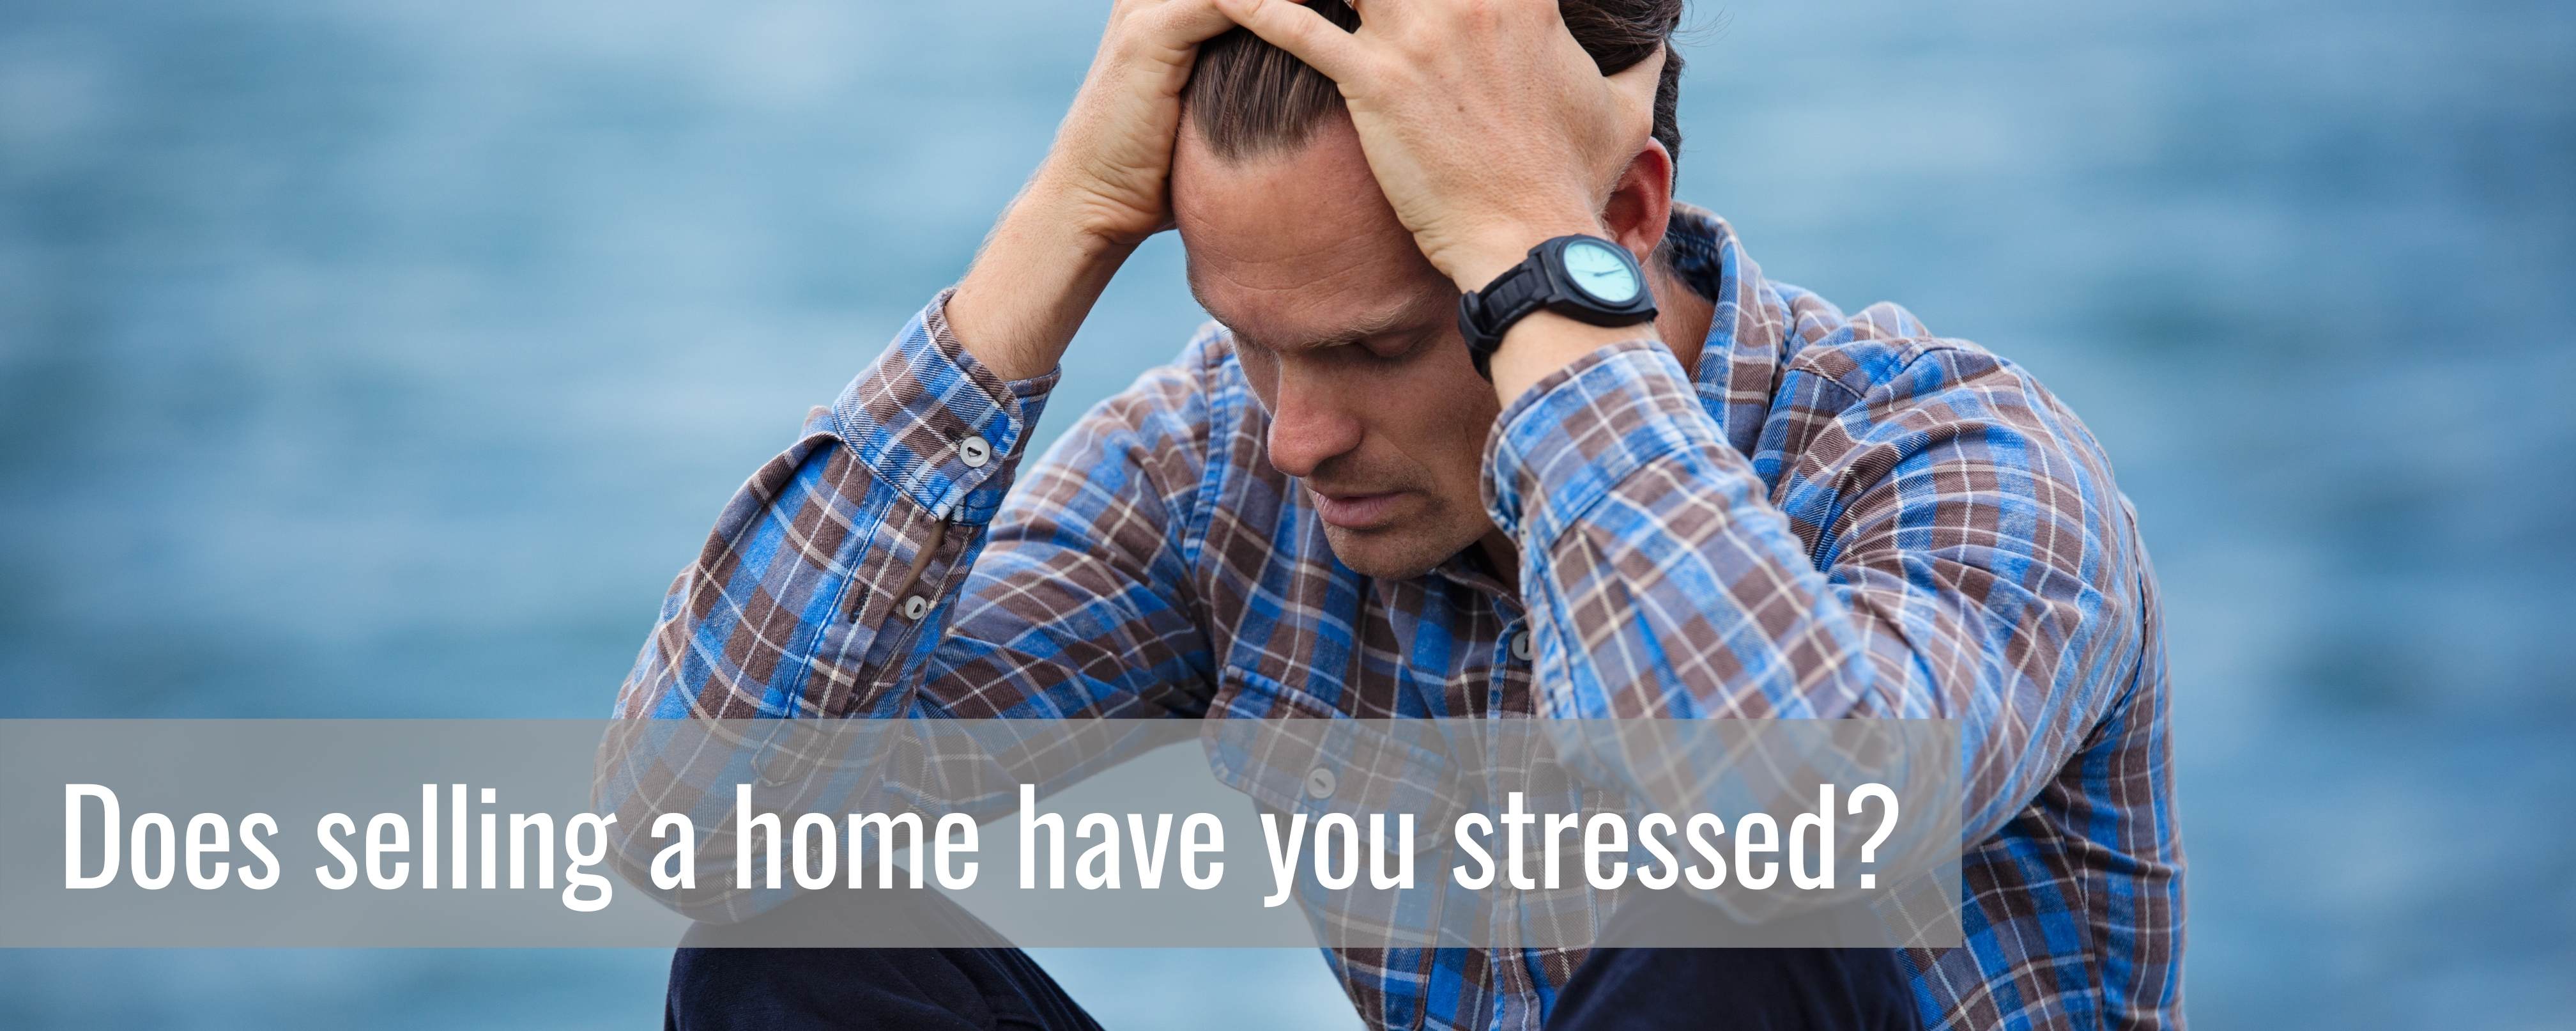 Home Seller Stressed